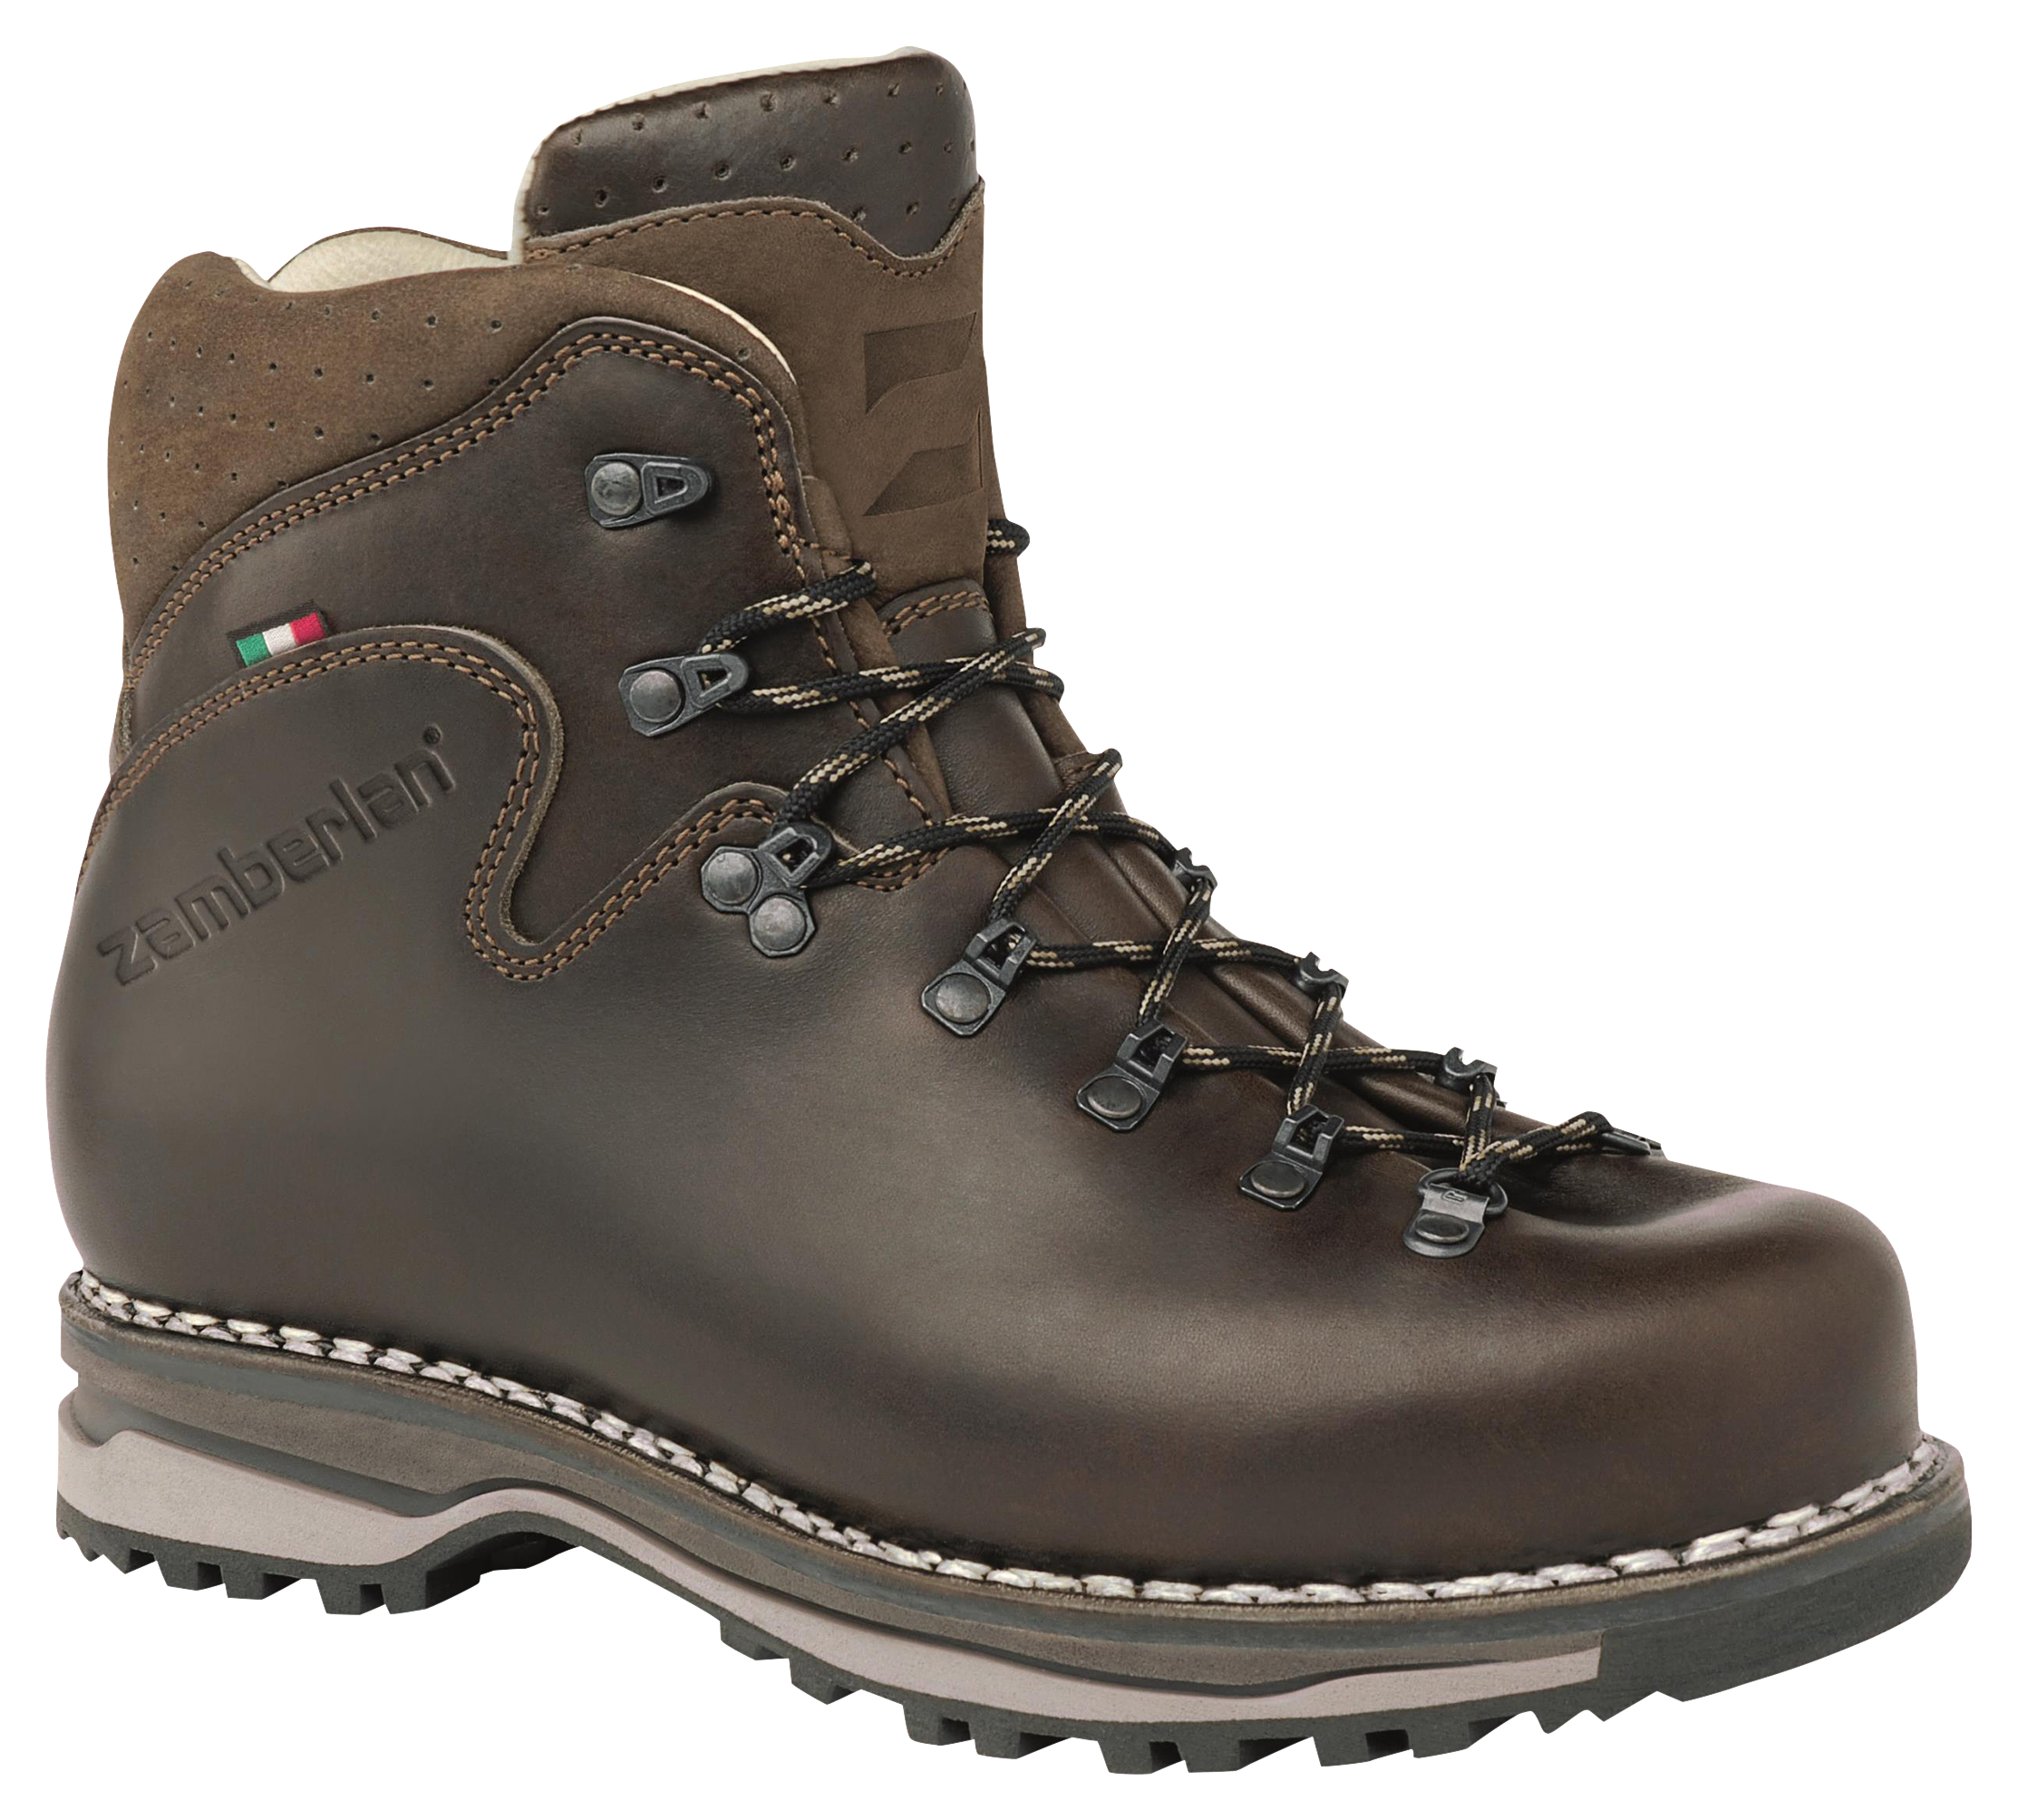 Zamberlan Latemar NW Hiking Boots for Men - Waxed Dark Brown - 10 5M